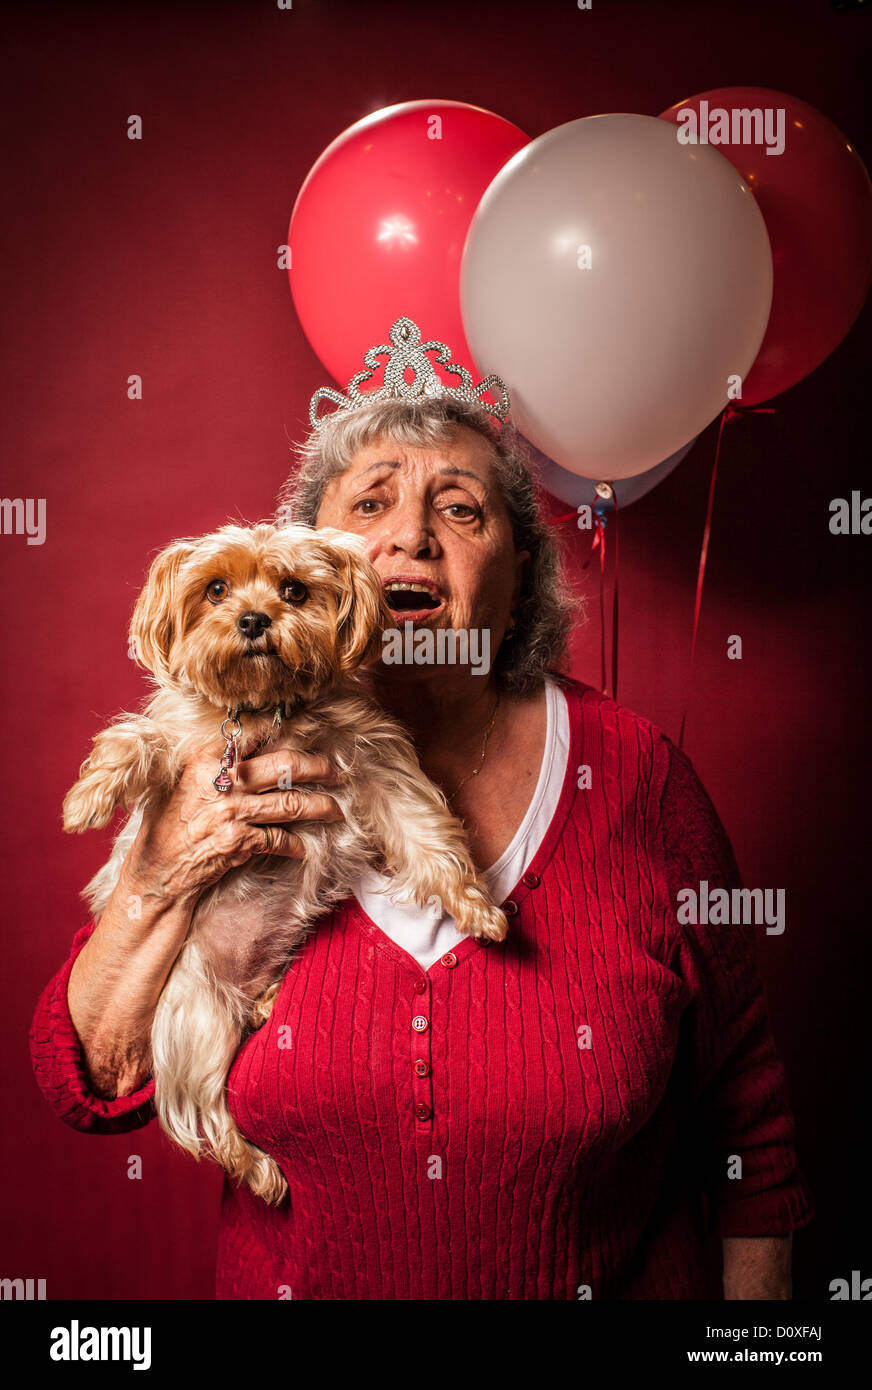 Senior woman holding dog and wearing a tiara Stock Photo